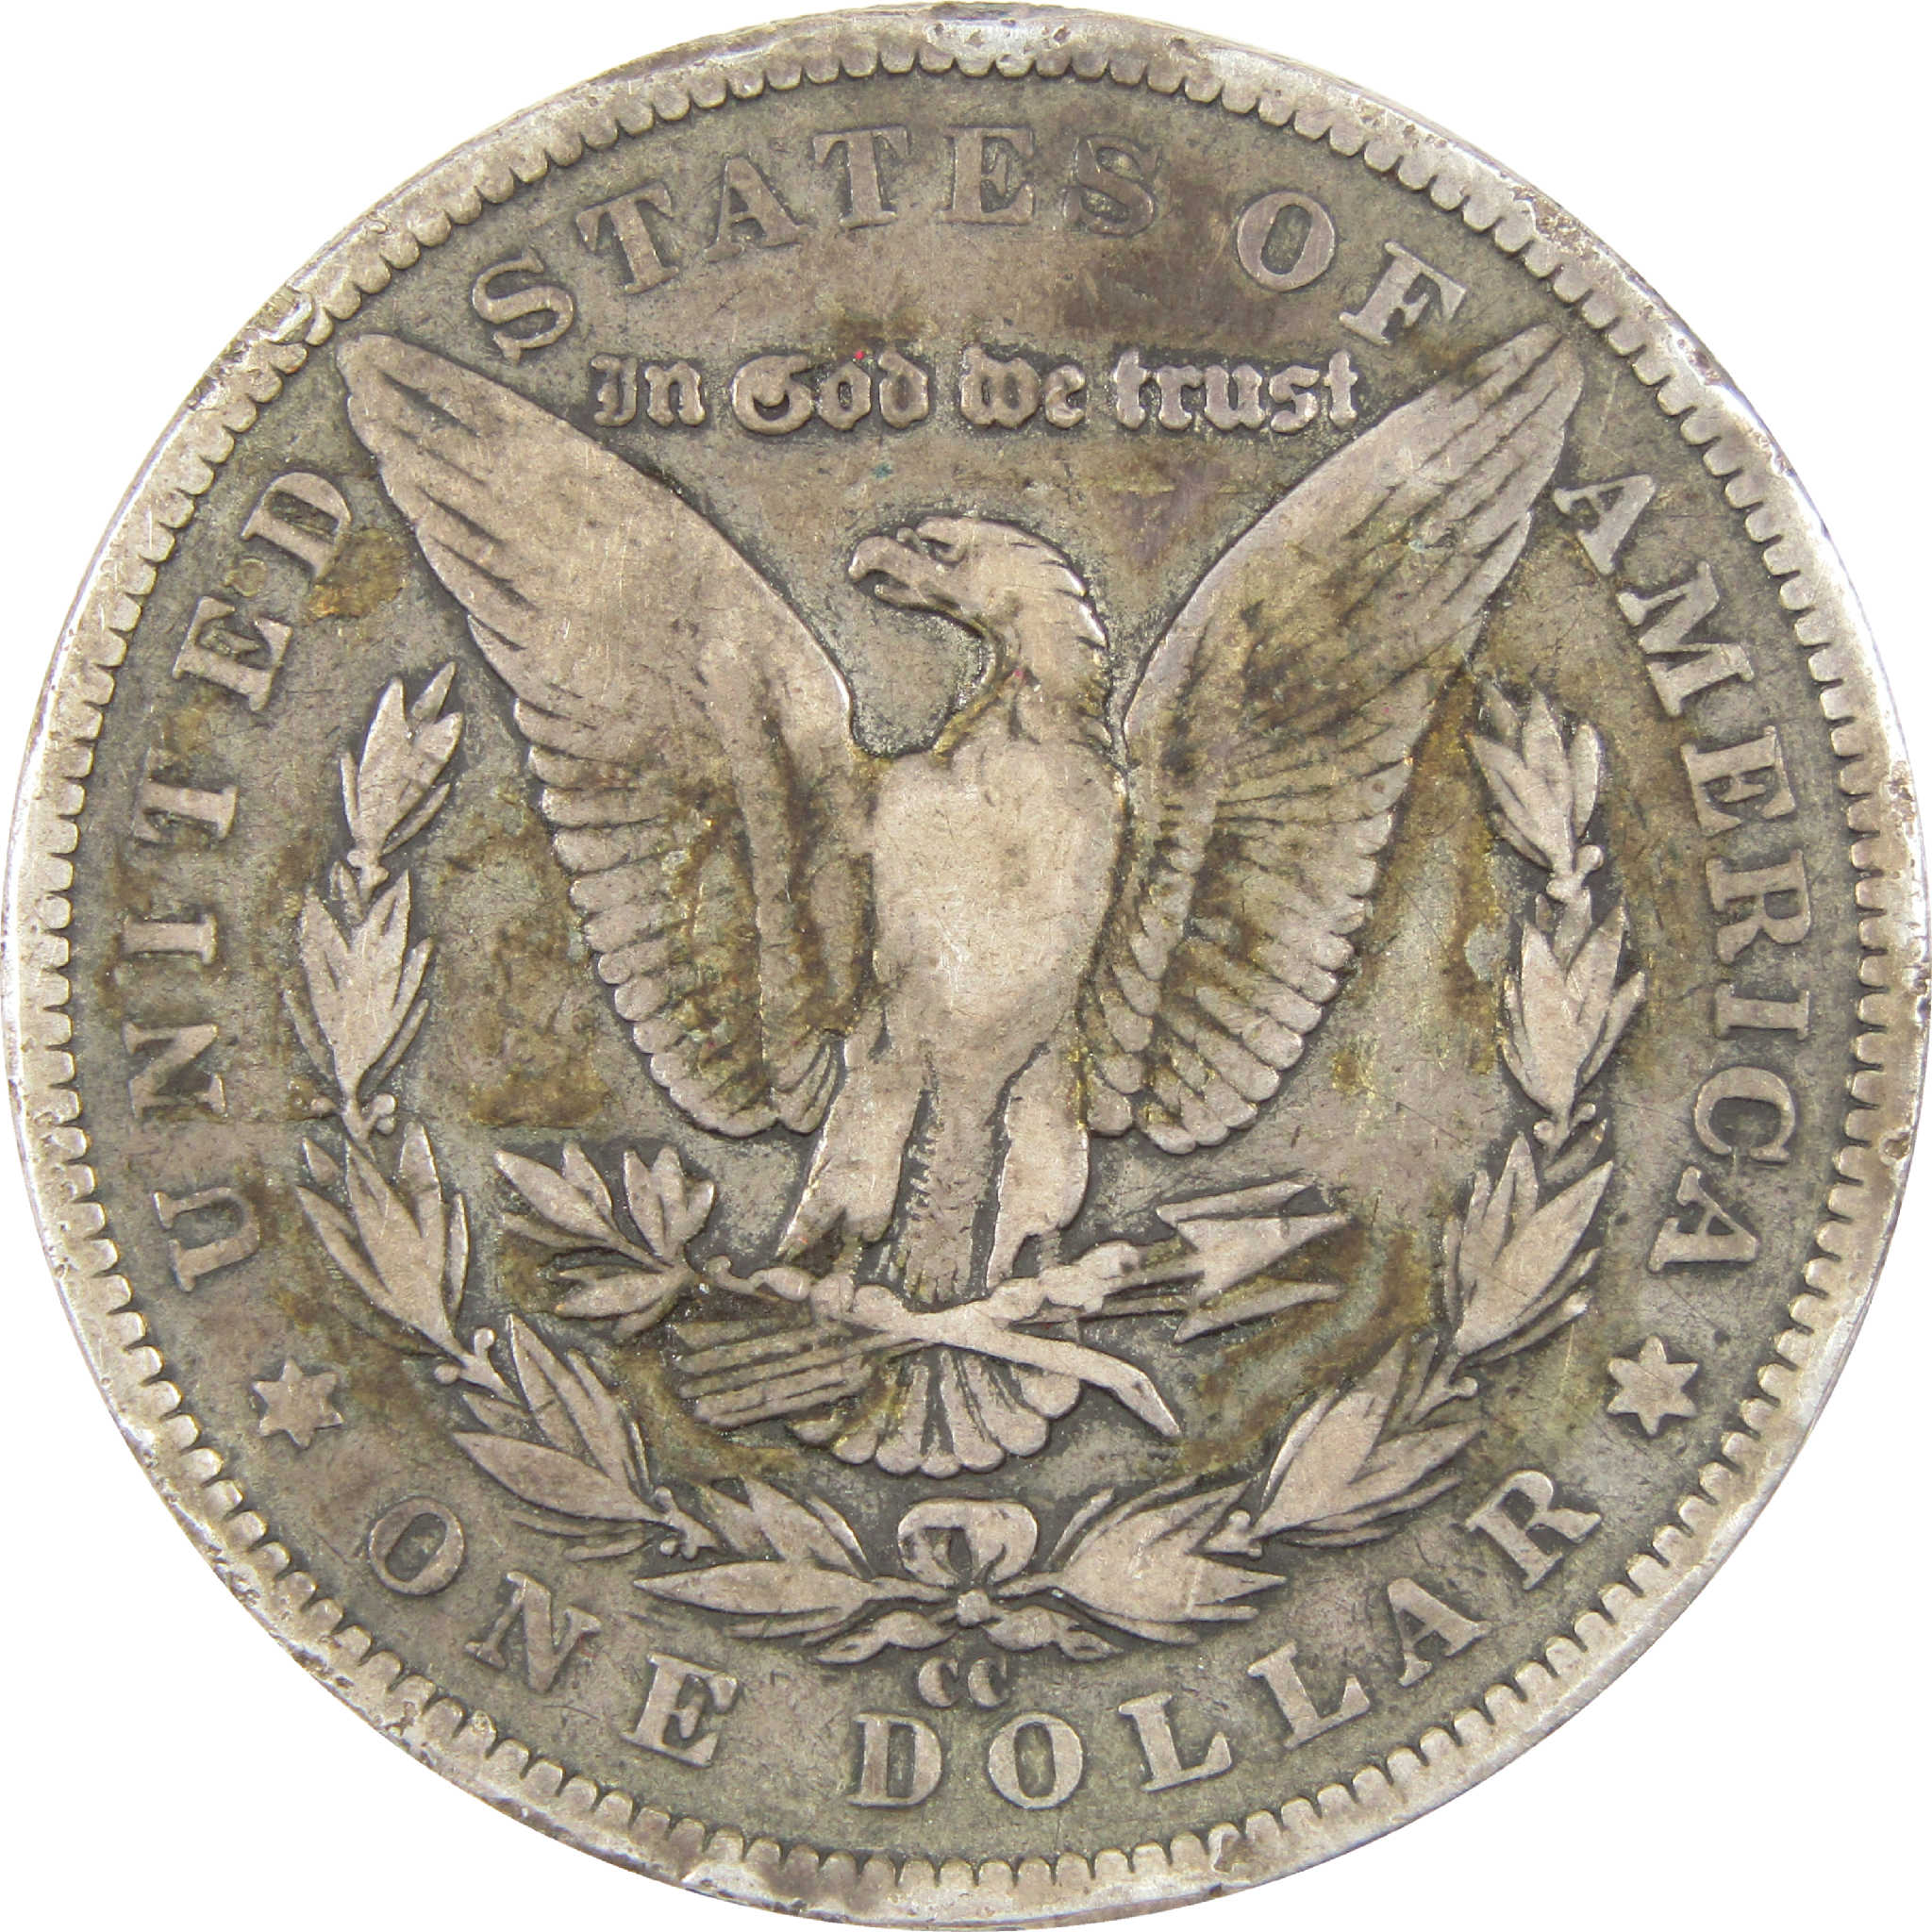 1891 CC Morgan Dollar Very Good Details Silver Dirty Spots SKU:I11273 - Morgan coin - Morgan silver dollar - Morgan silver dollar for sale - Profile Coins &amp; Collectibles